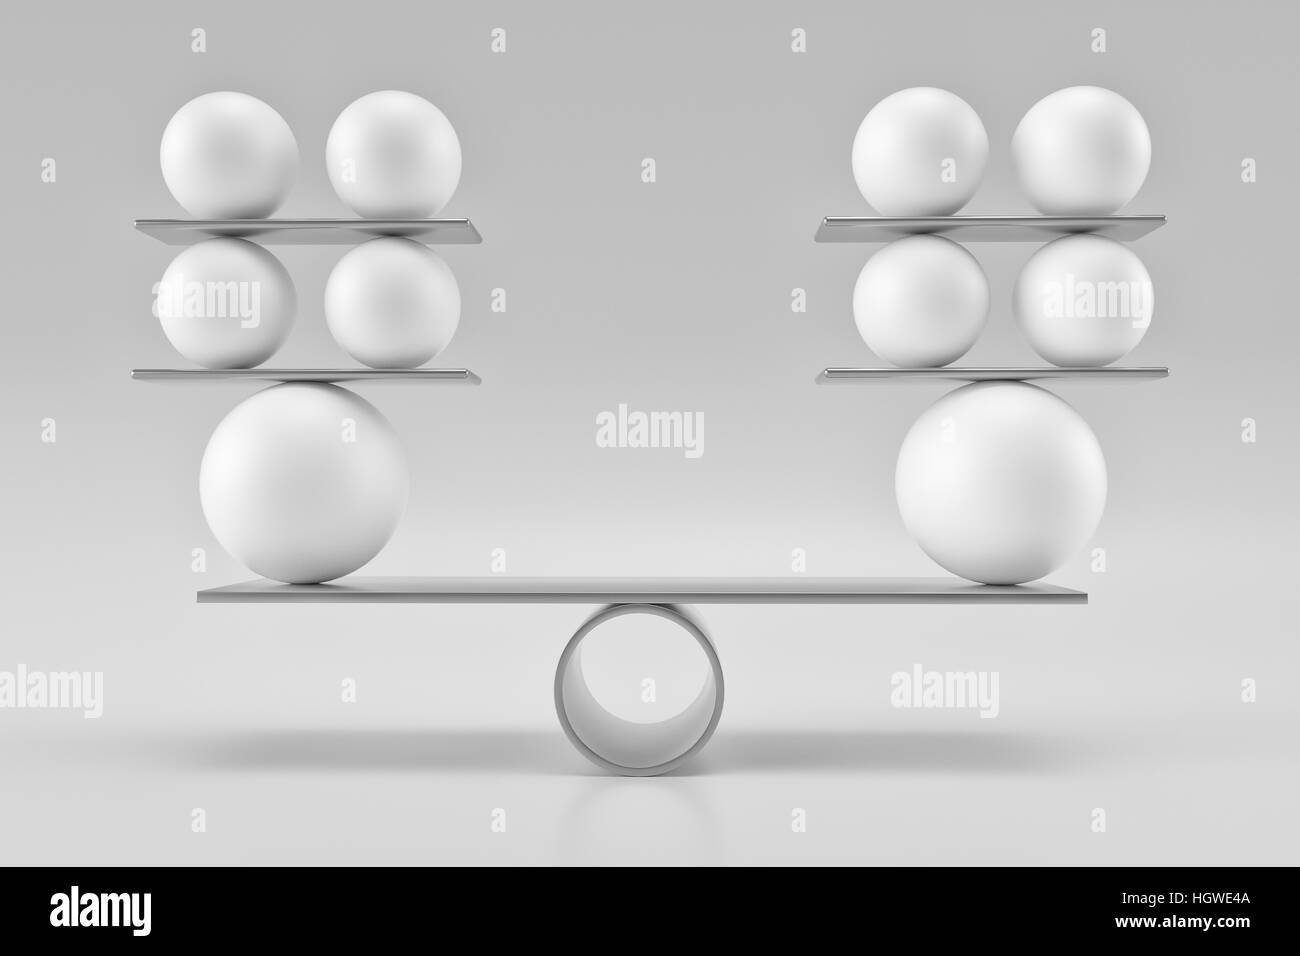 Balancing balls - 3D rendering Stock Photo